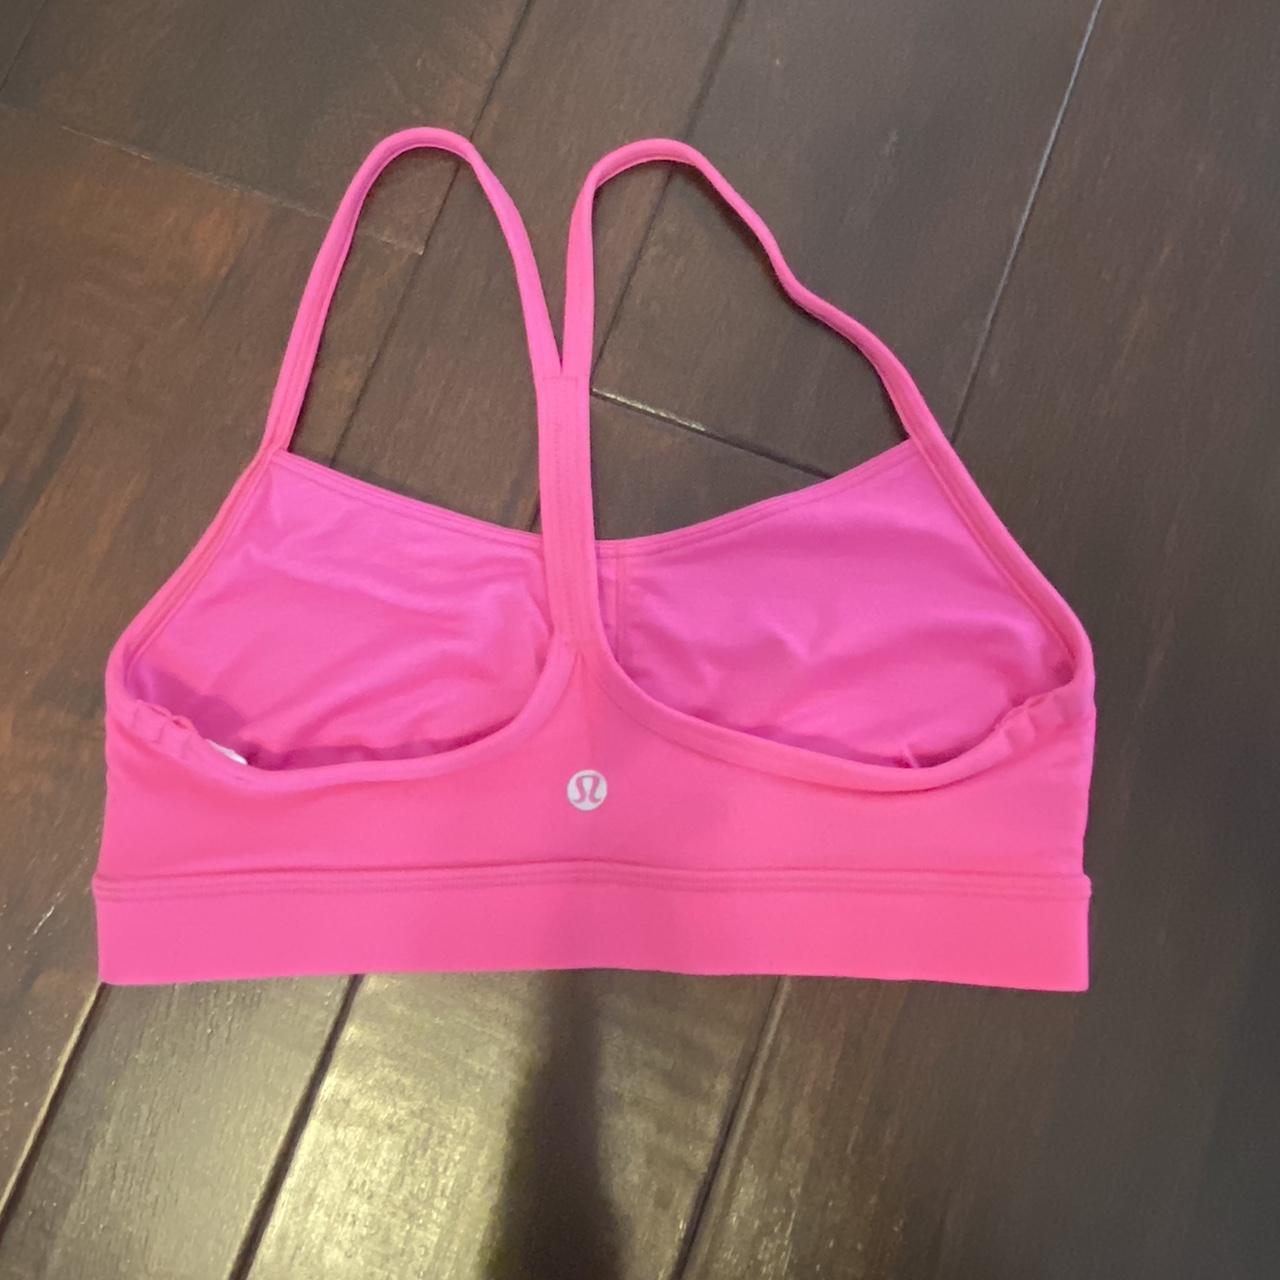 Bright pink lululemon sports bra 💞 - Depop